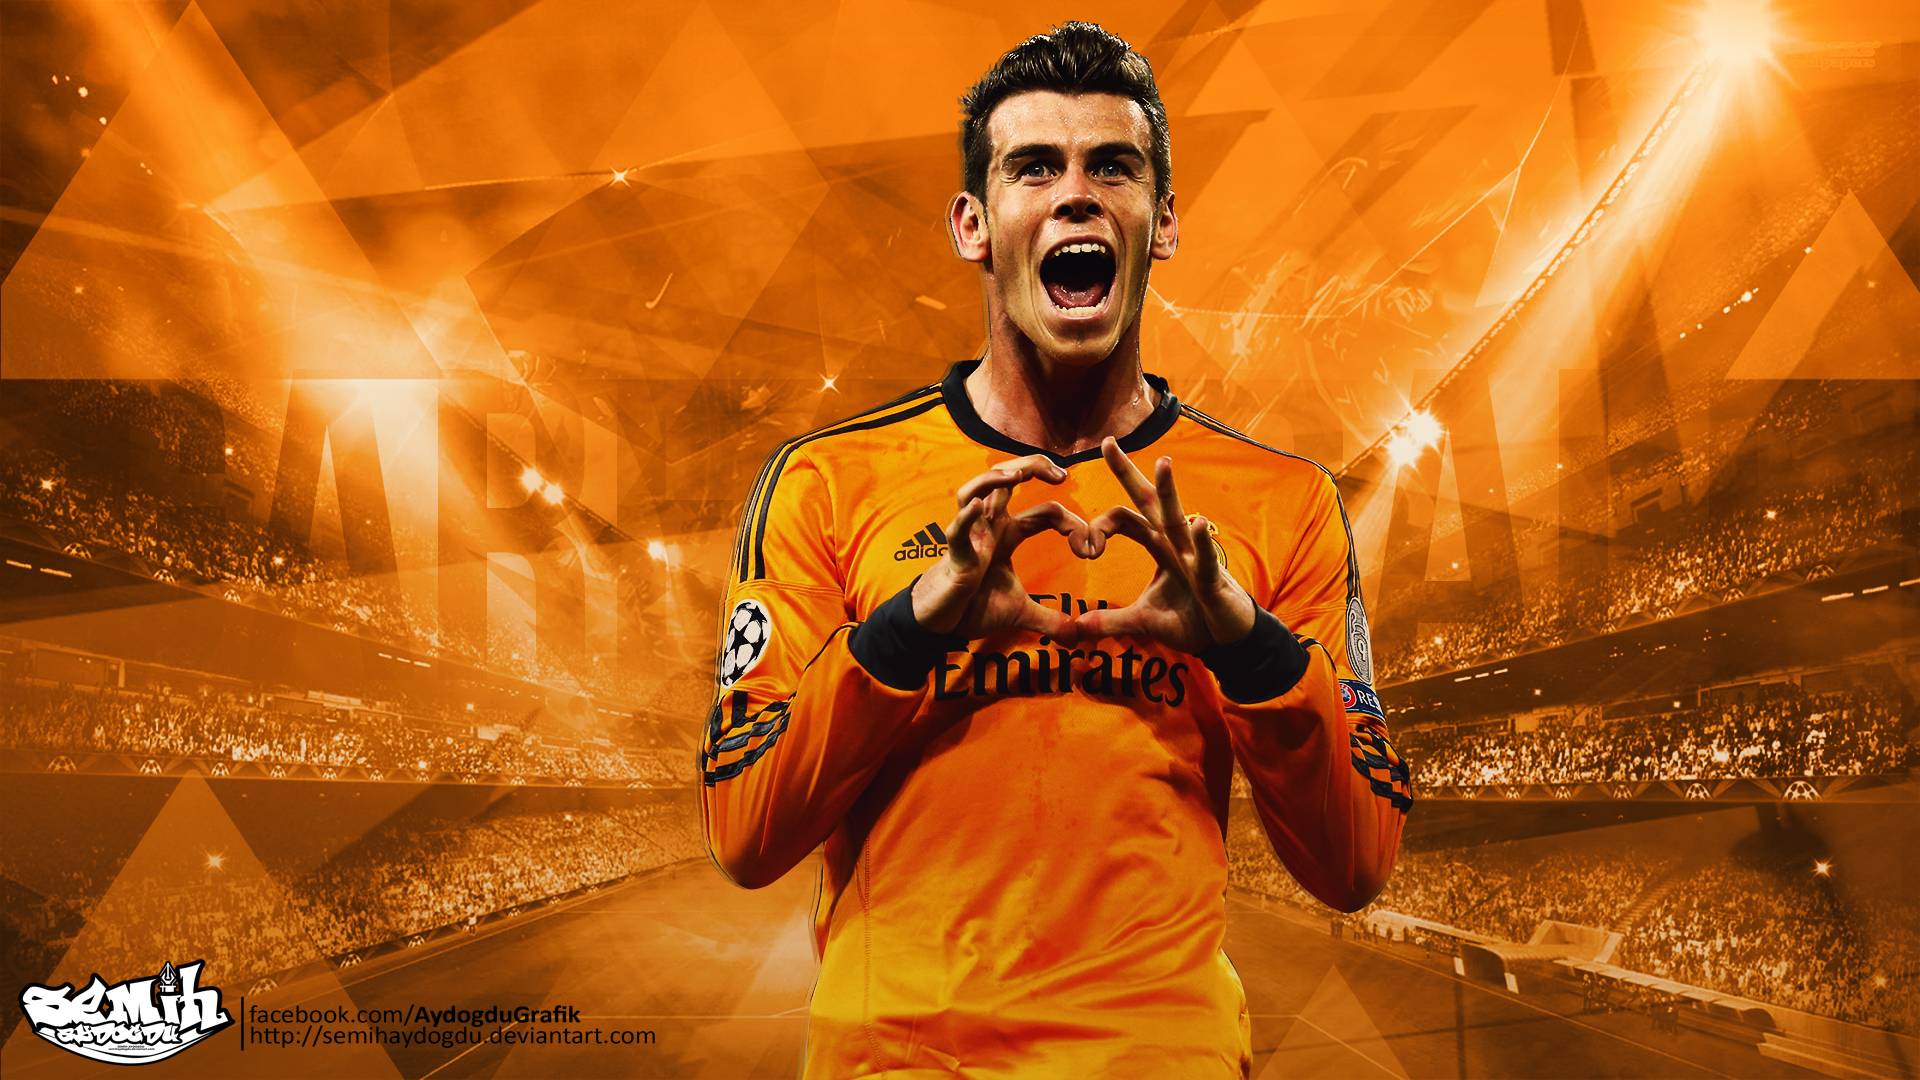 Cool wallpaper of Gareth Bale Real Madrid 2014